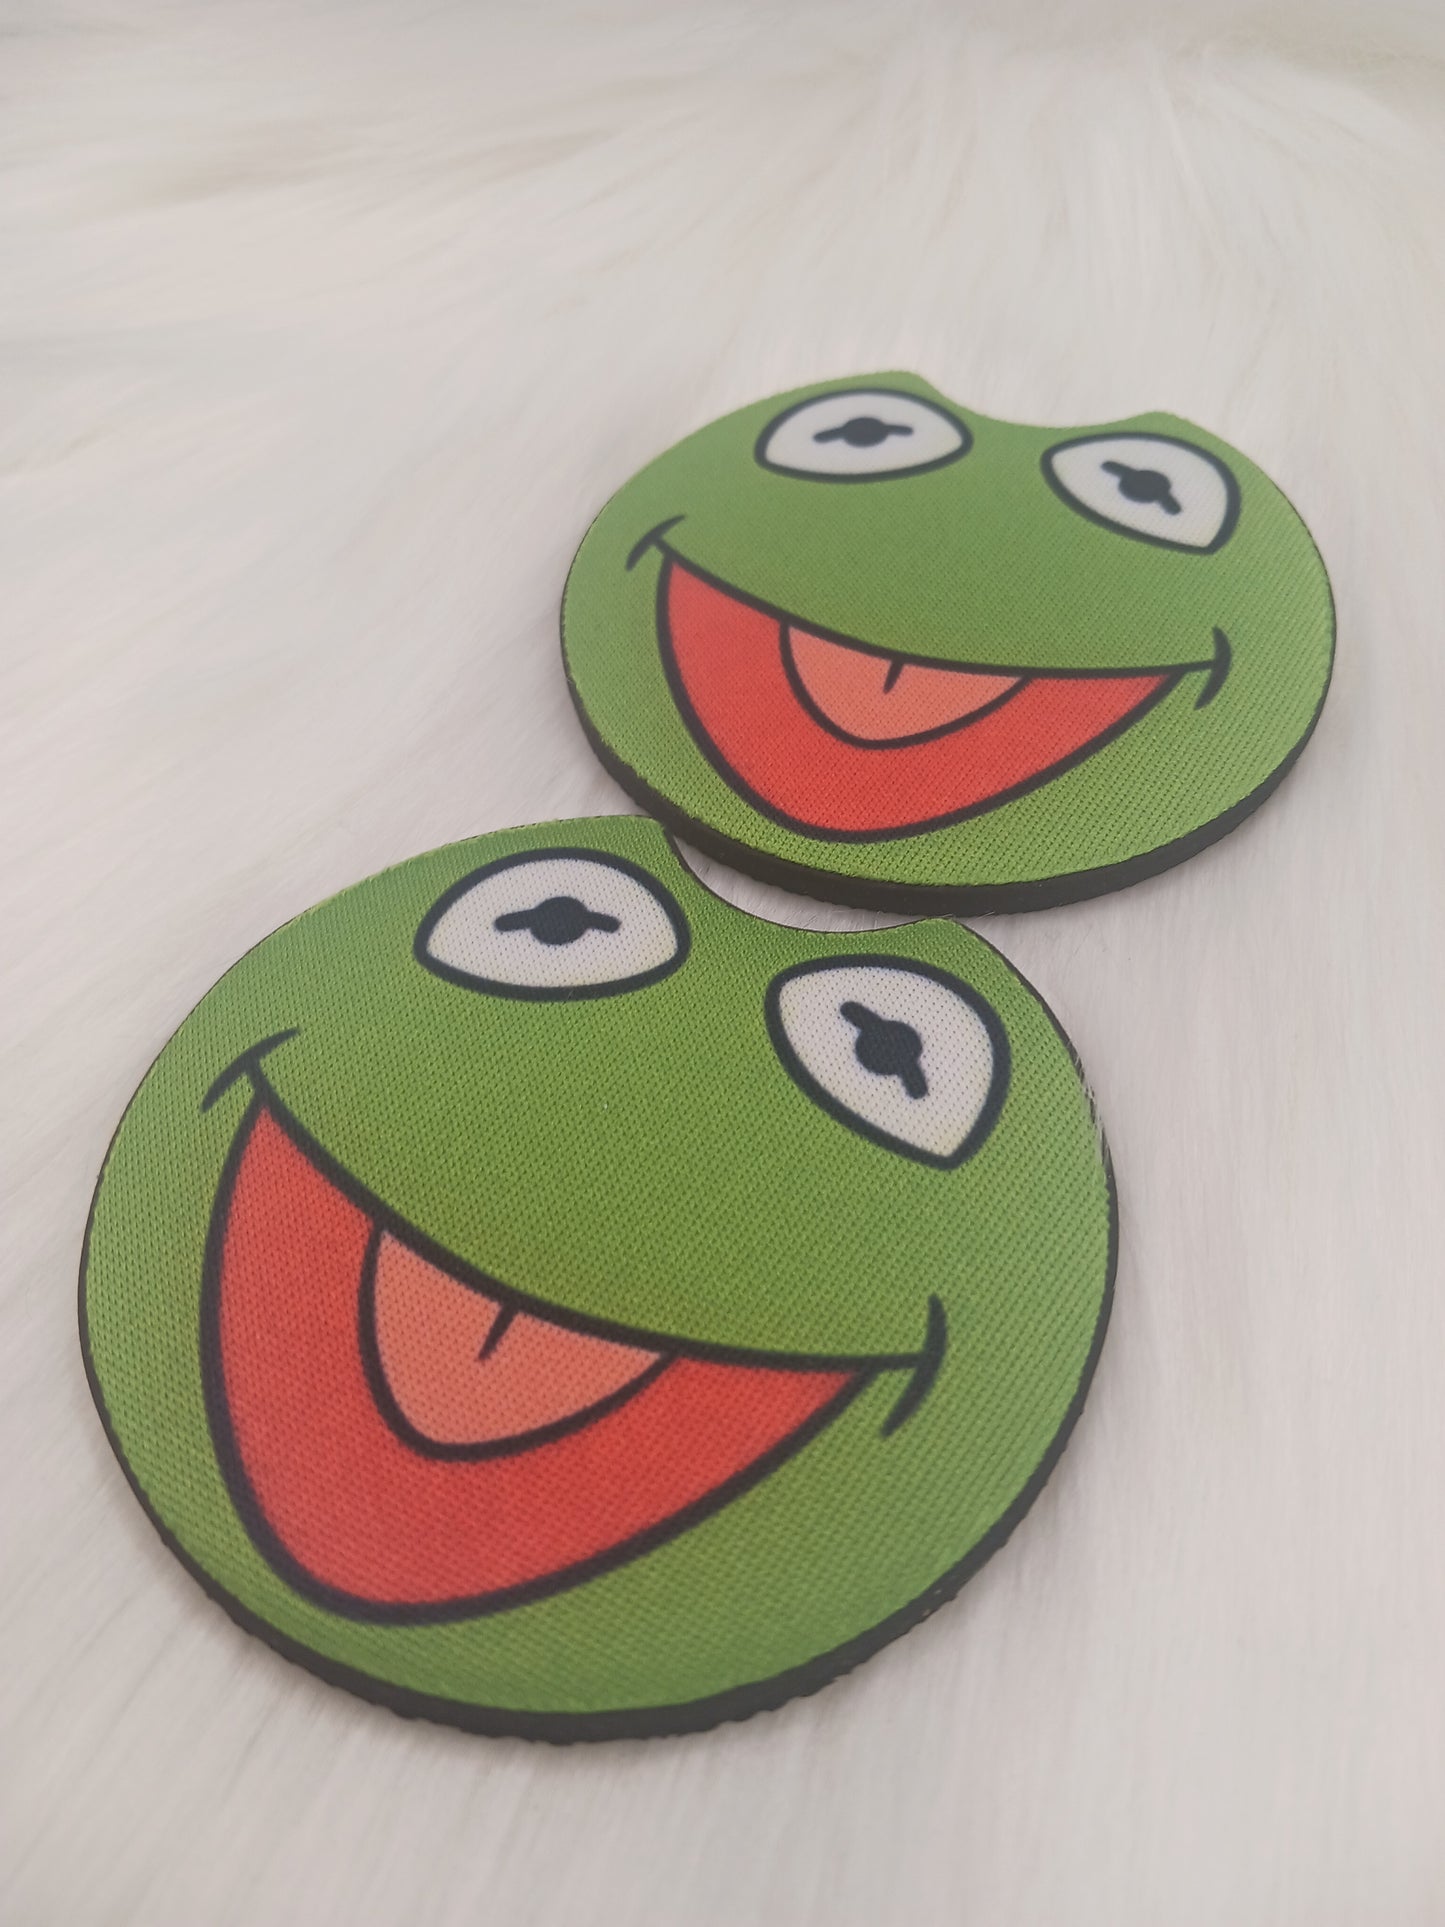 Green frog car coasters